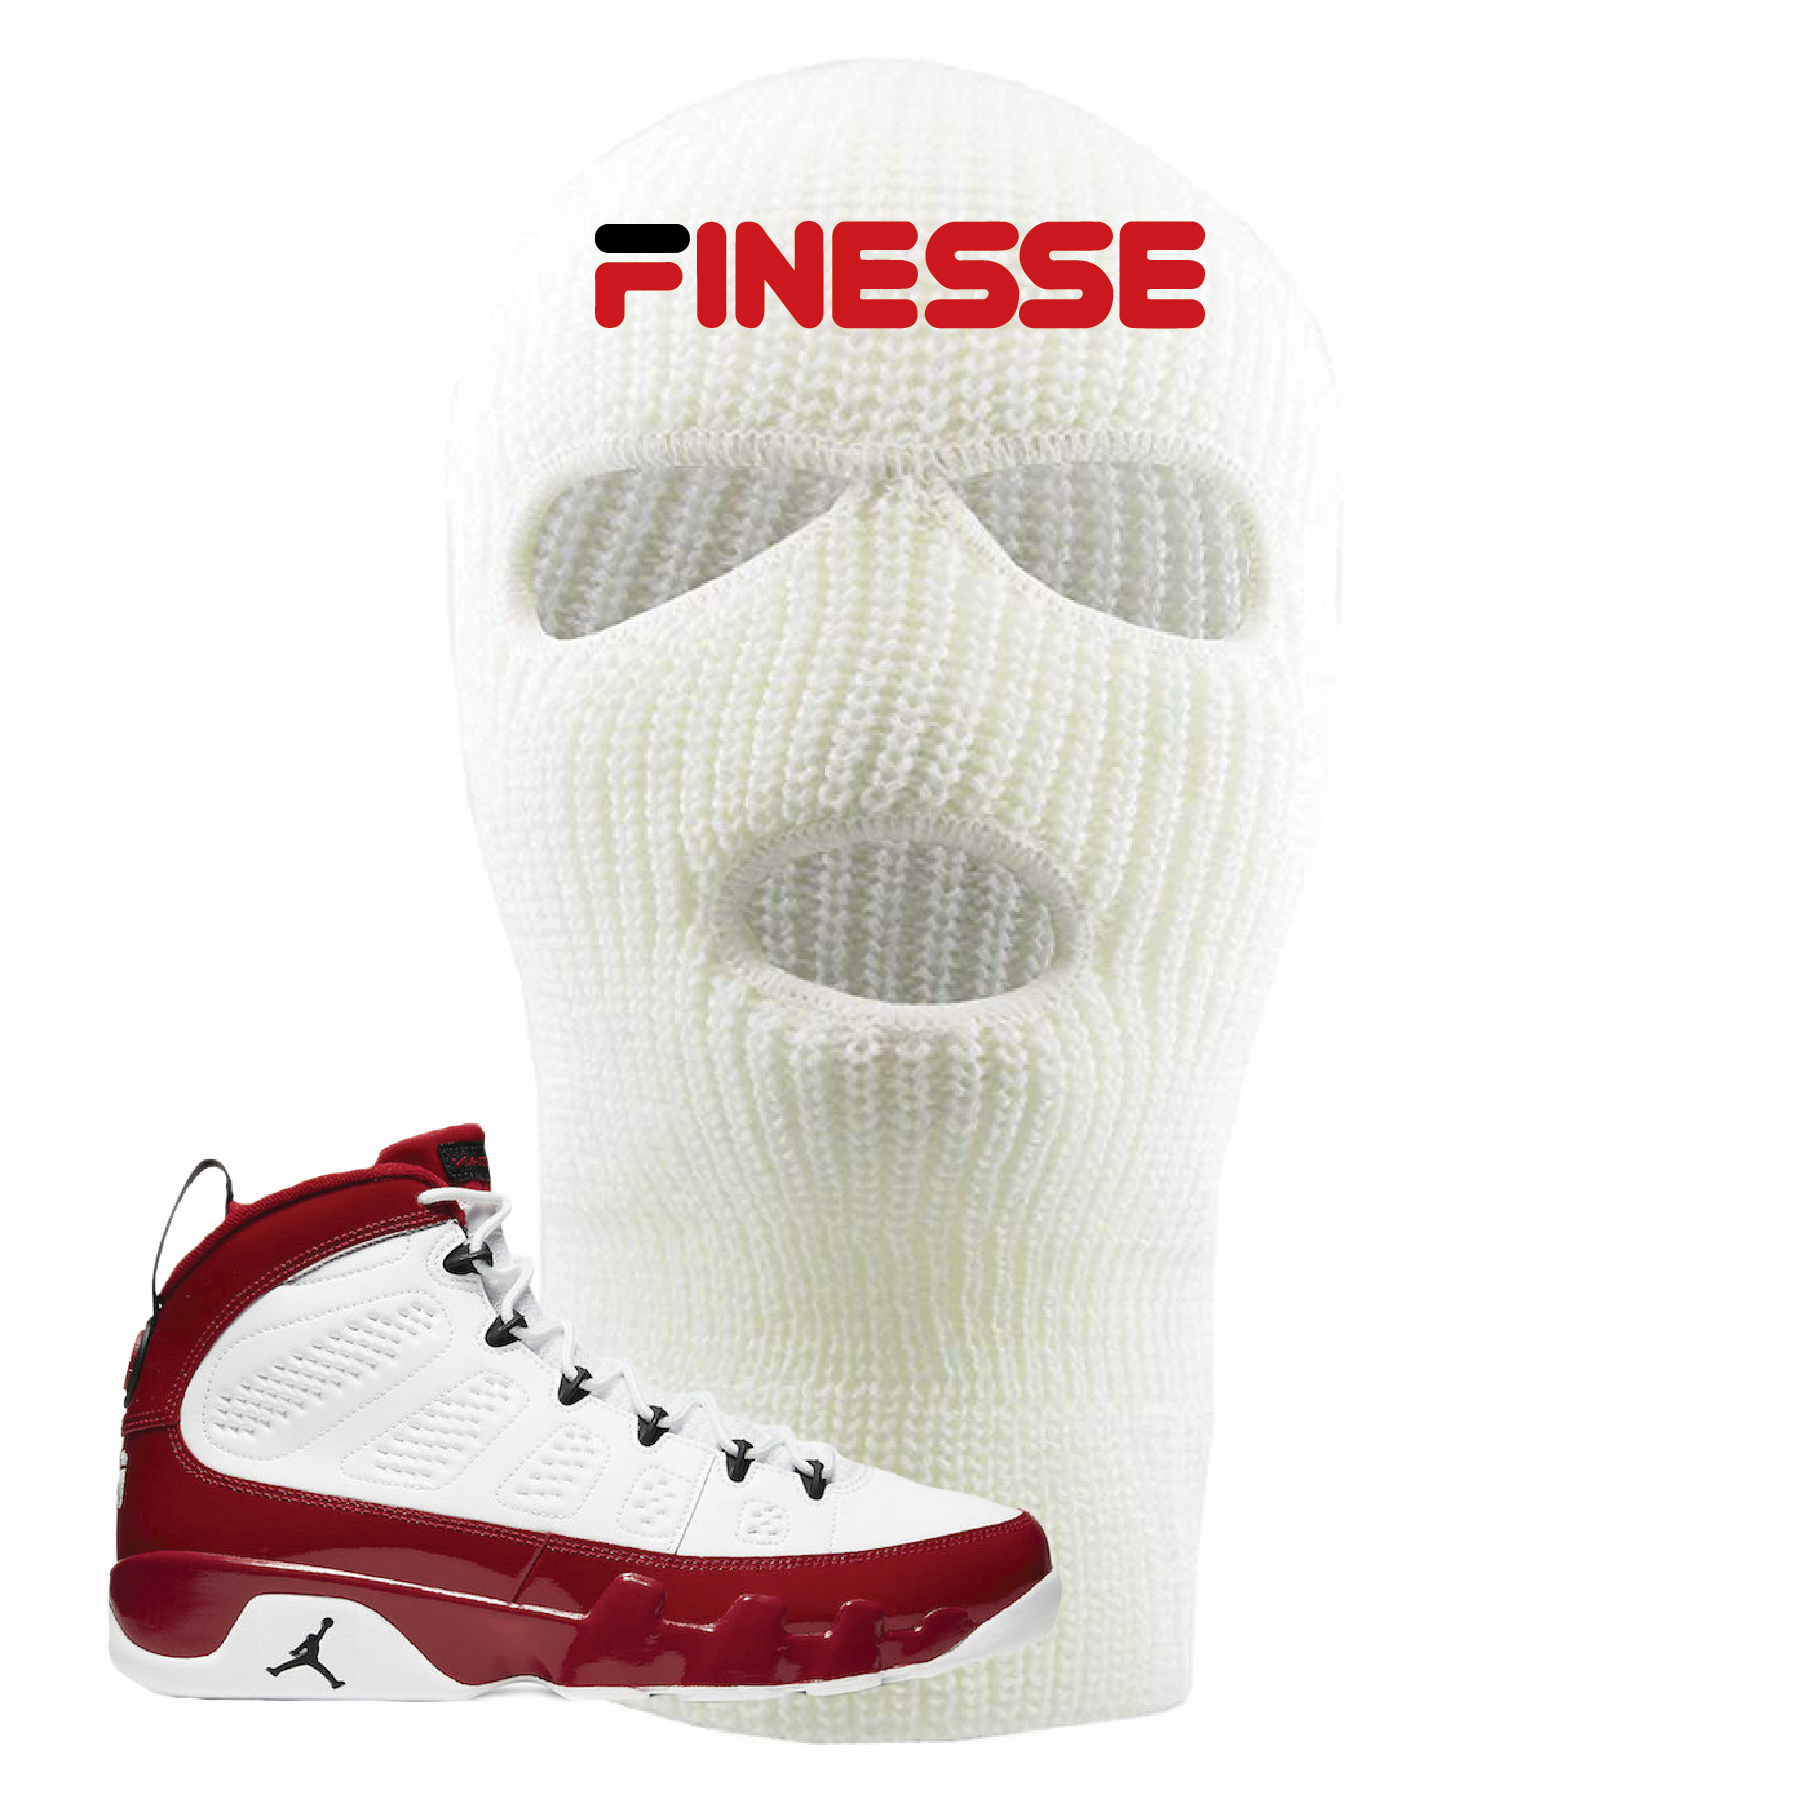 Jordan 9 Gym Red Finesse White Sneaker Hook Up Ski Mask